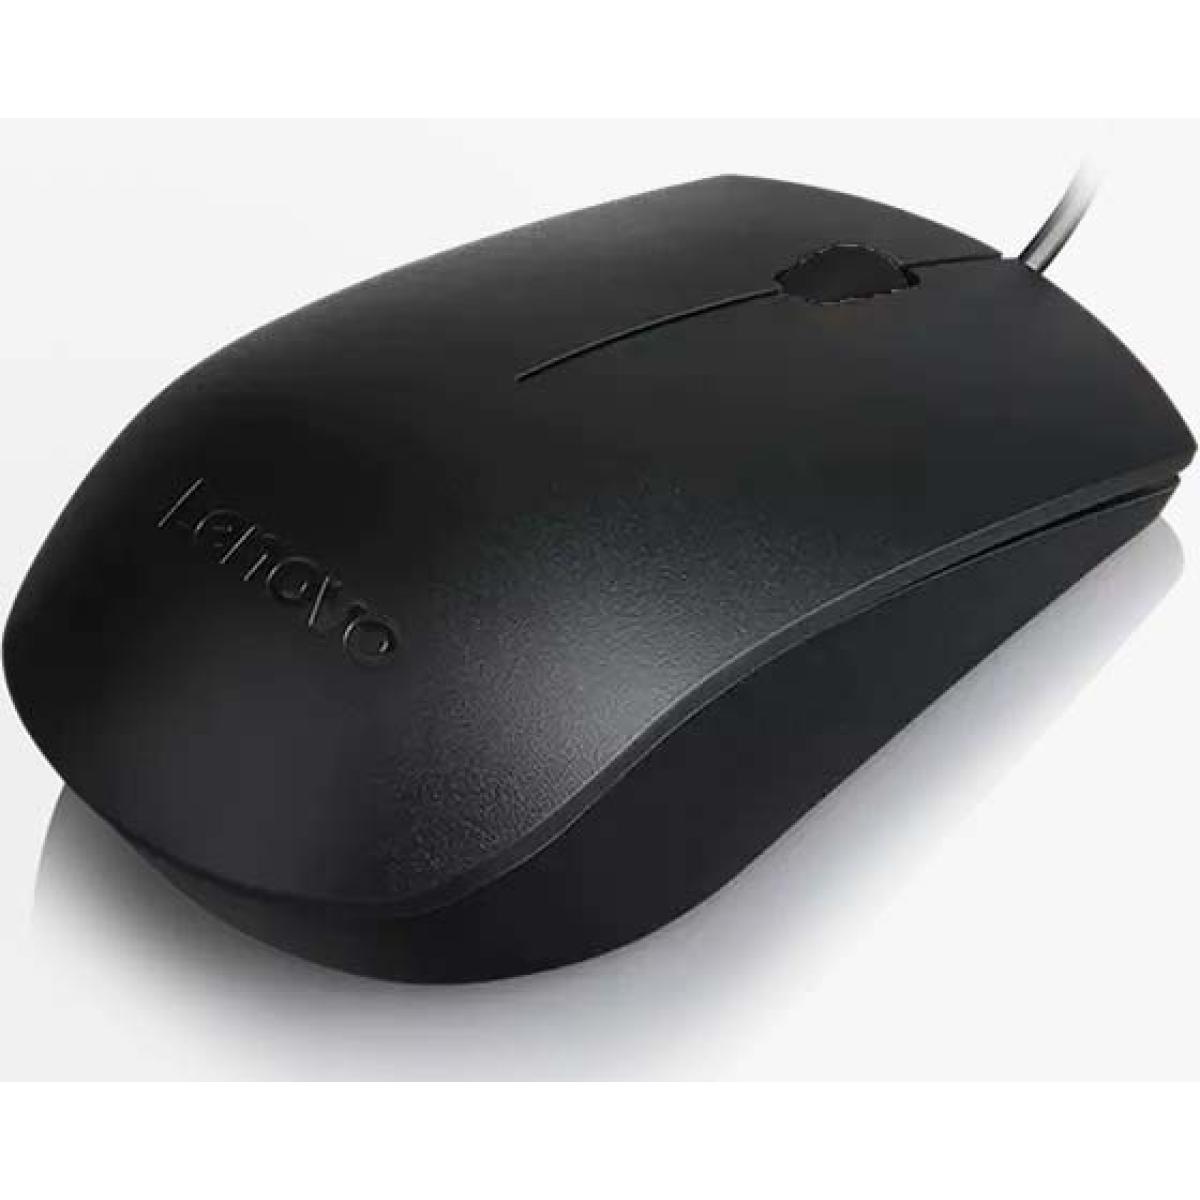 Lenovo MK11 One-Click Service Cable Mouse